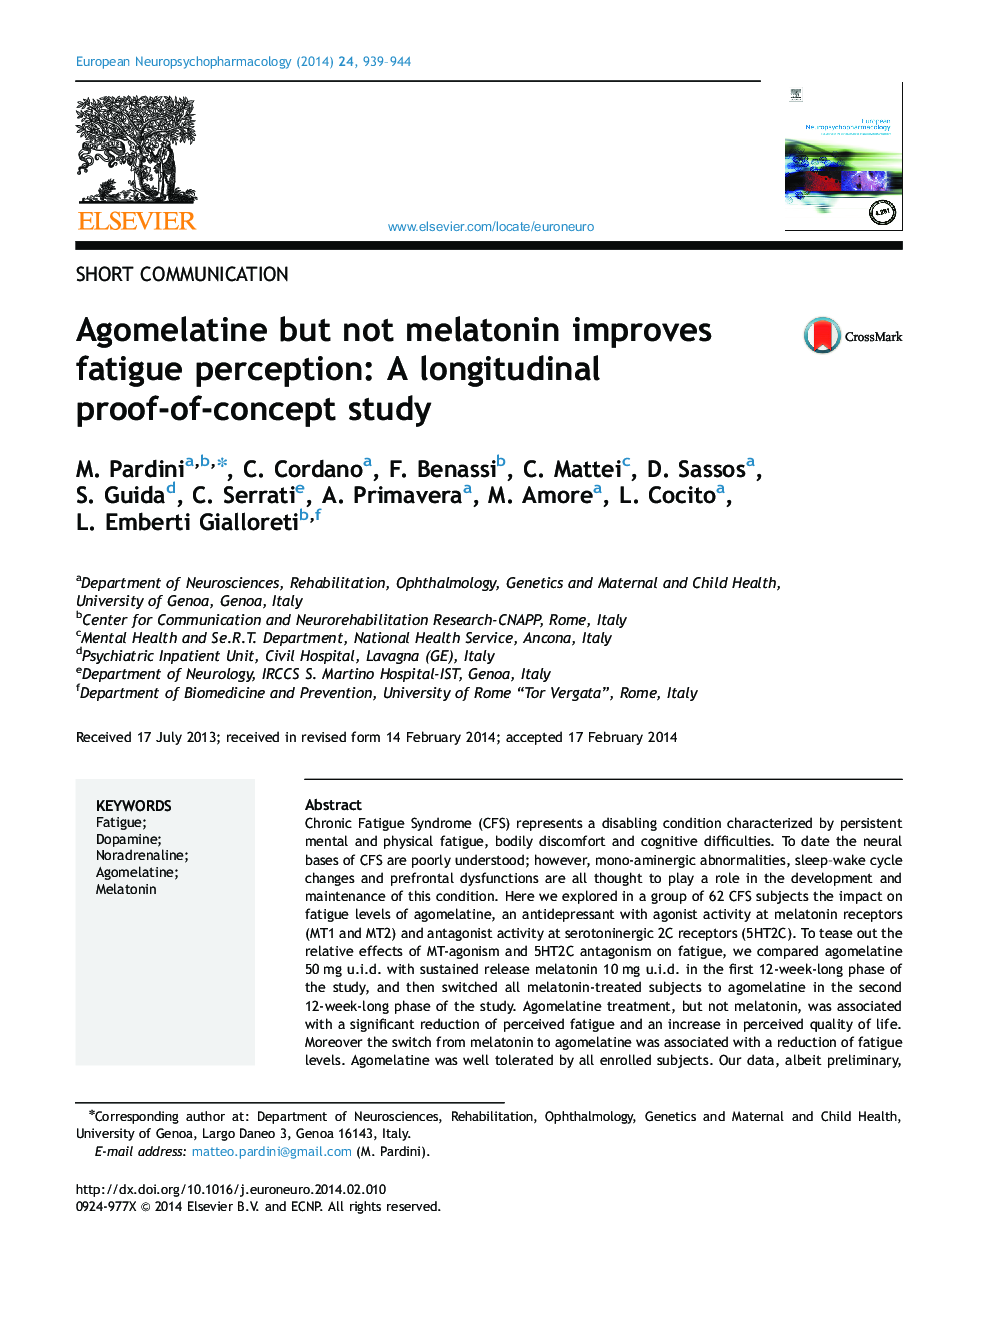 Agomelatine but not melatonin improves fatigue perception: A longitudinal proof-of-concept study